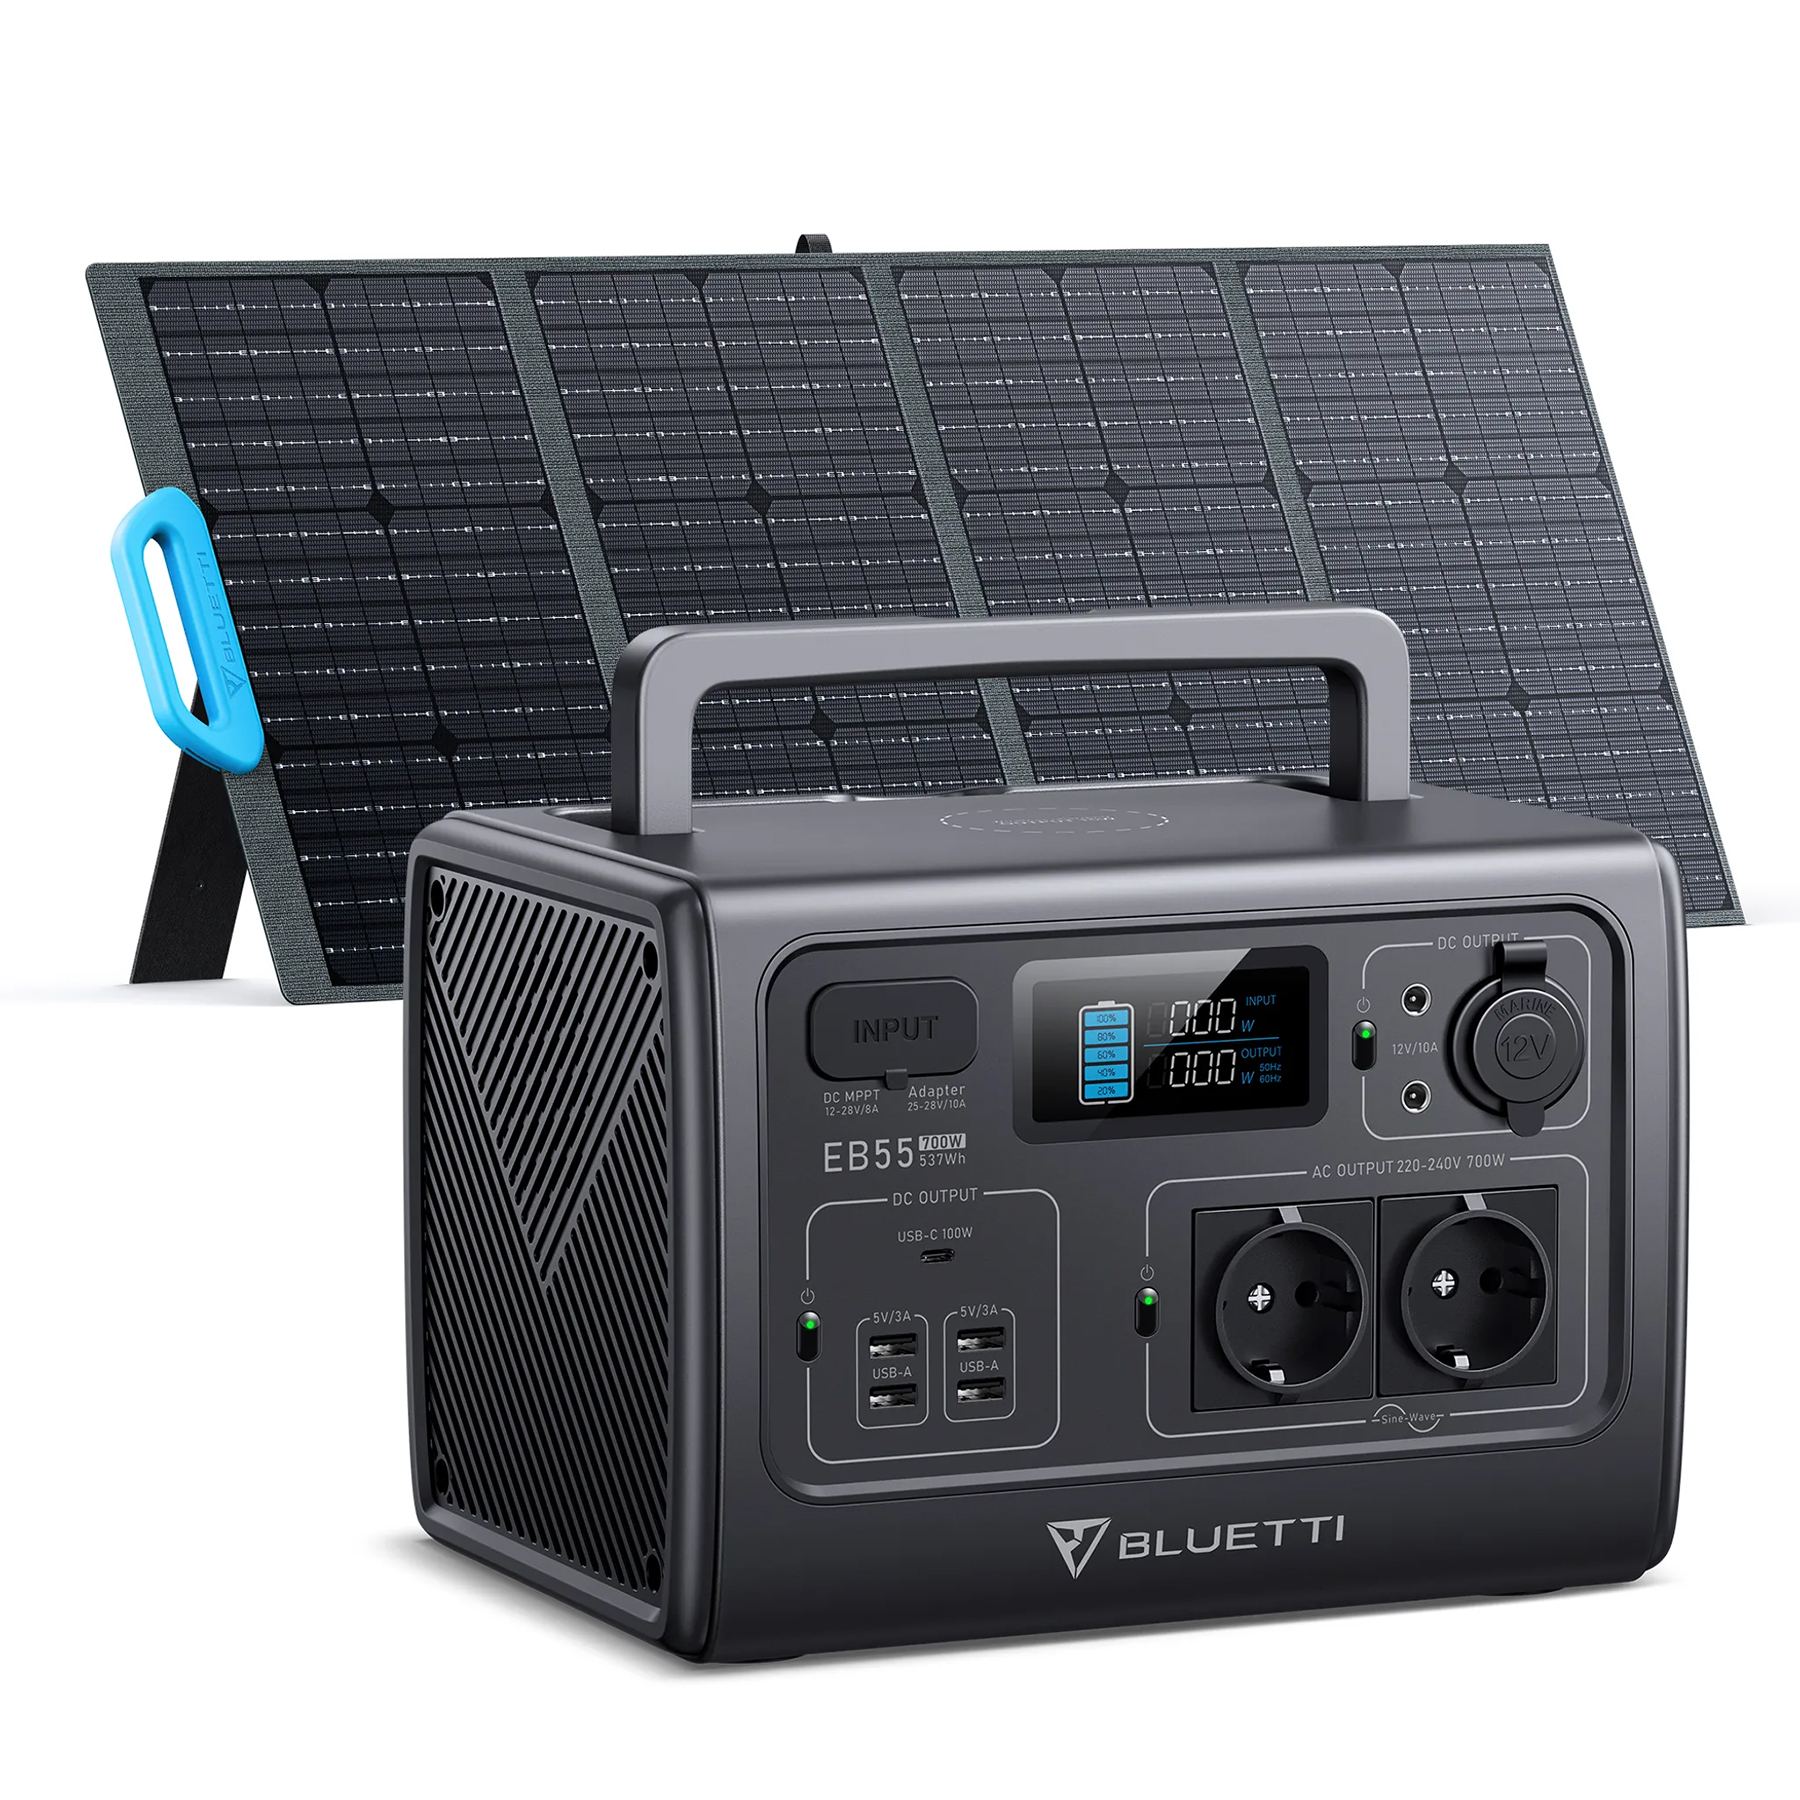 PV120 Powerstation 120W LiFePO4 grau 537 EB55 und Stromzeuger Solarpanel 700W Wh BLUETTI